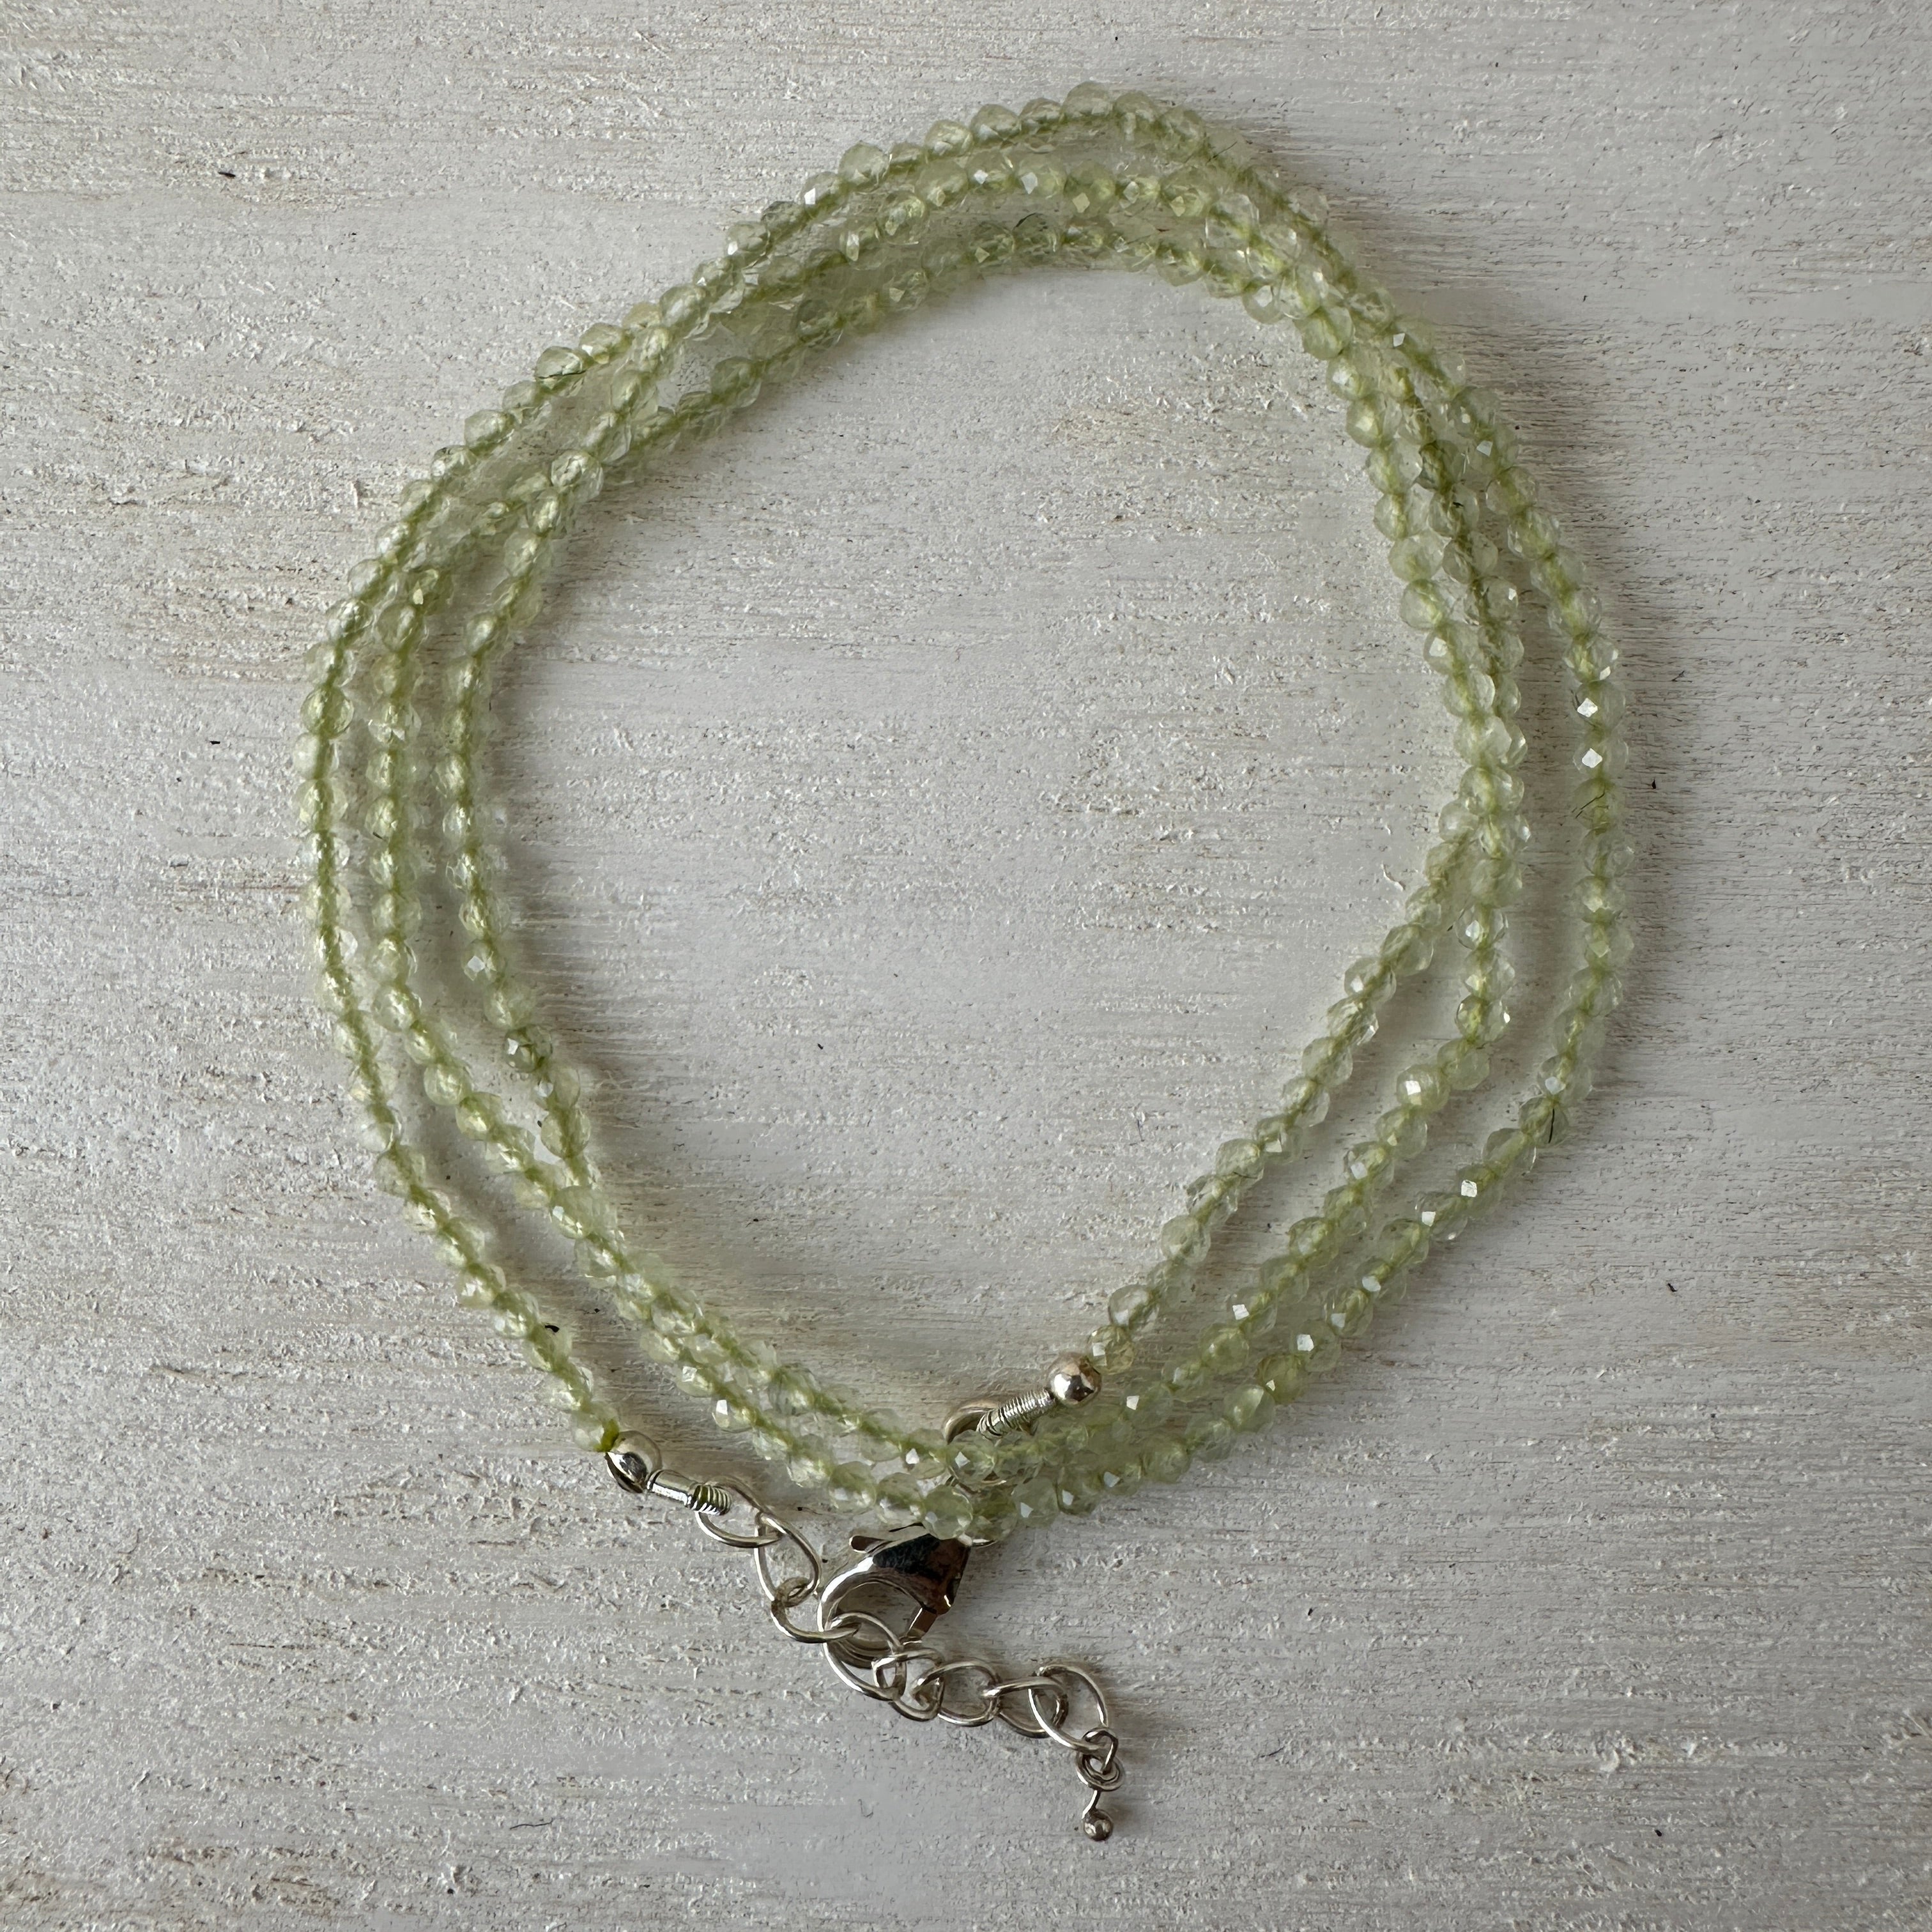 Prehnite Gemstone Crystal Sterling Silver Necklace / Bracelet - 18"